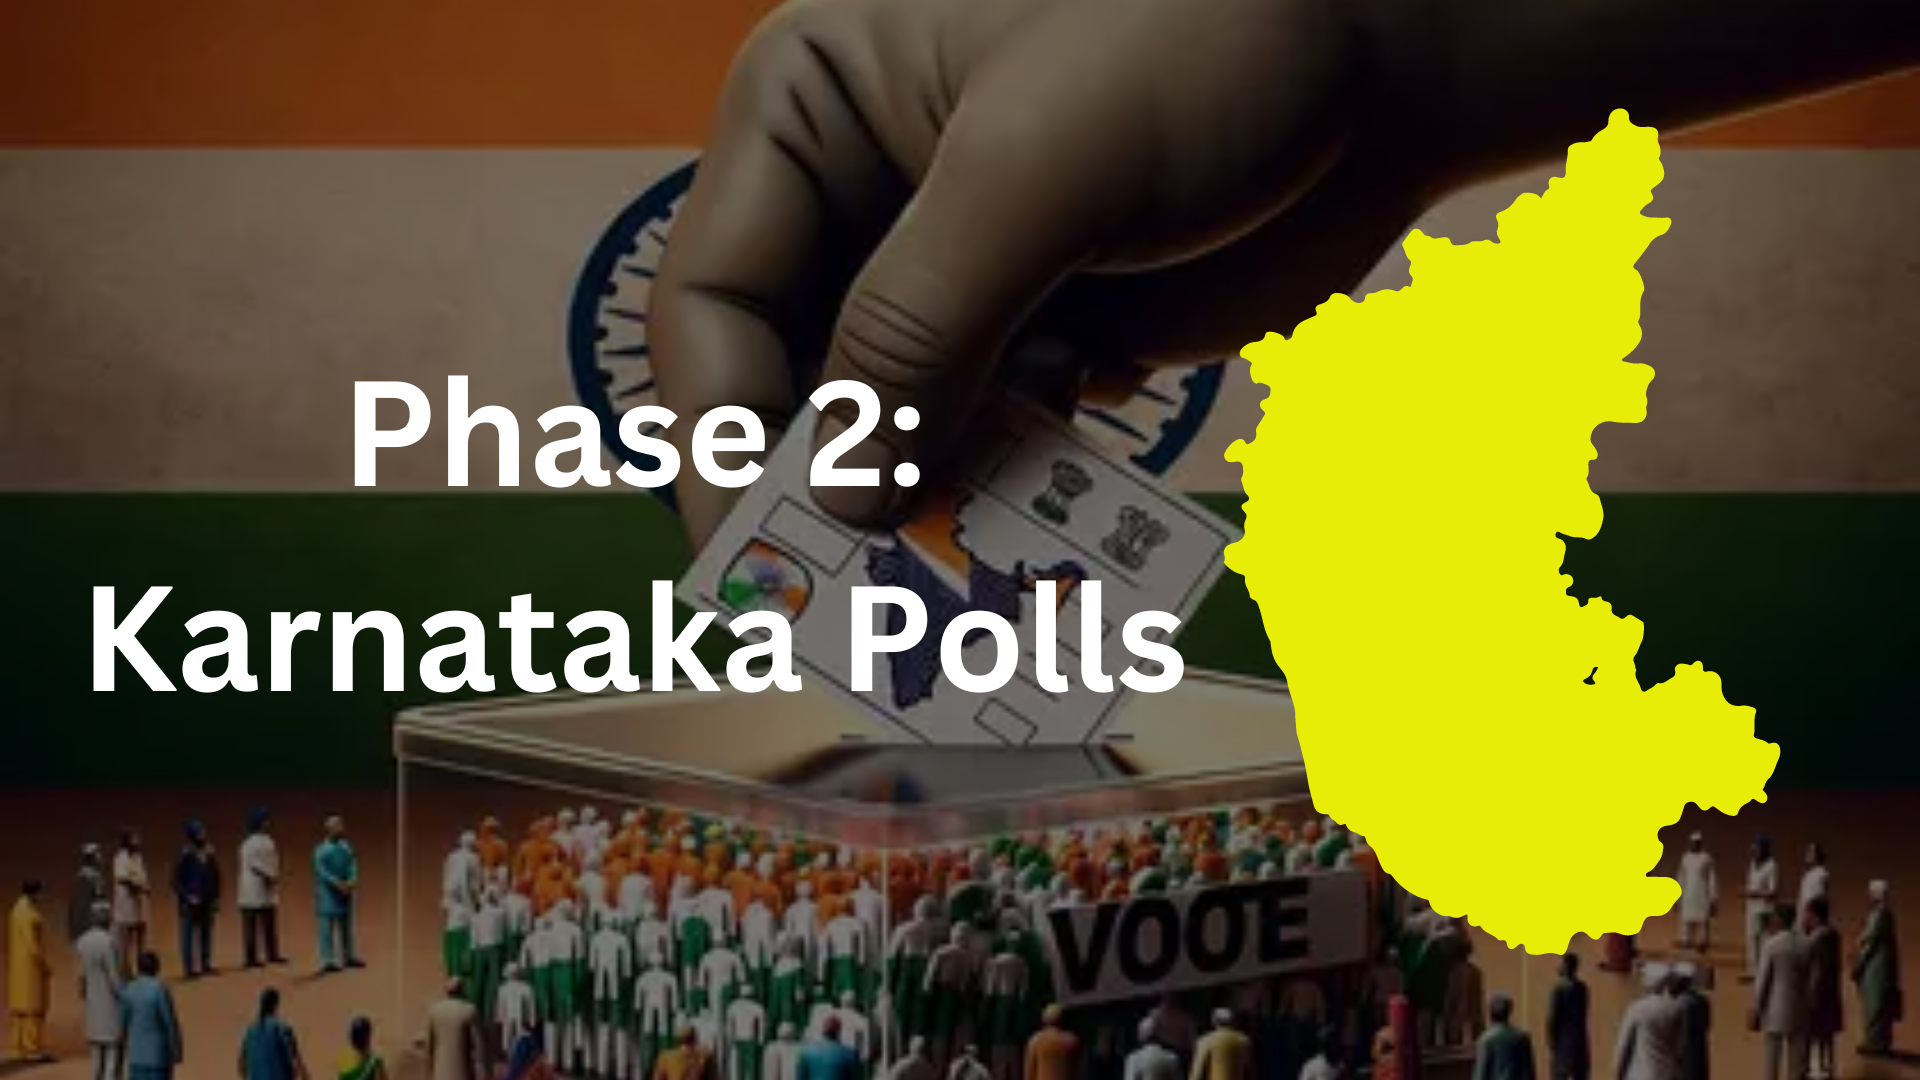 Phase 2 Elections: Sudha Murthy, Rahul Dravid, Prakash Raj Casts Vote In Bengaluru, Hotels Offer FREE Food